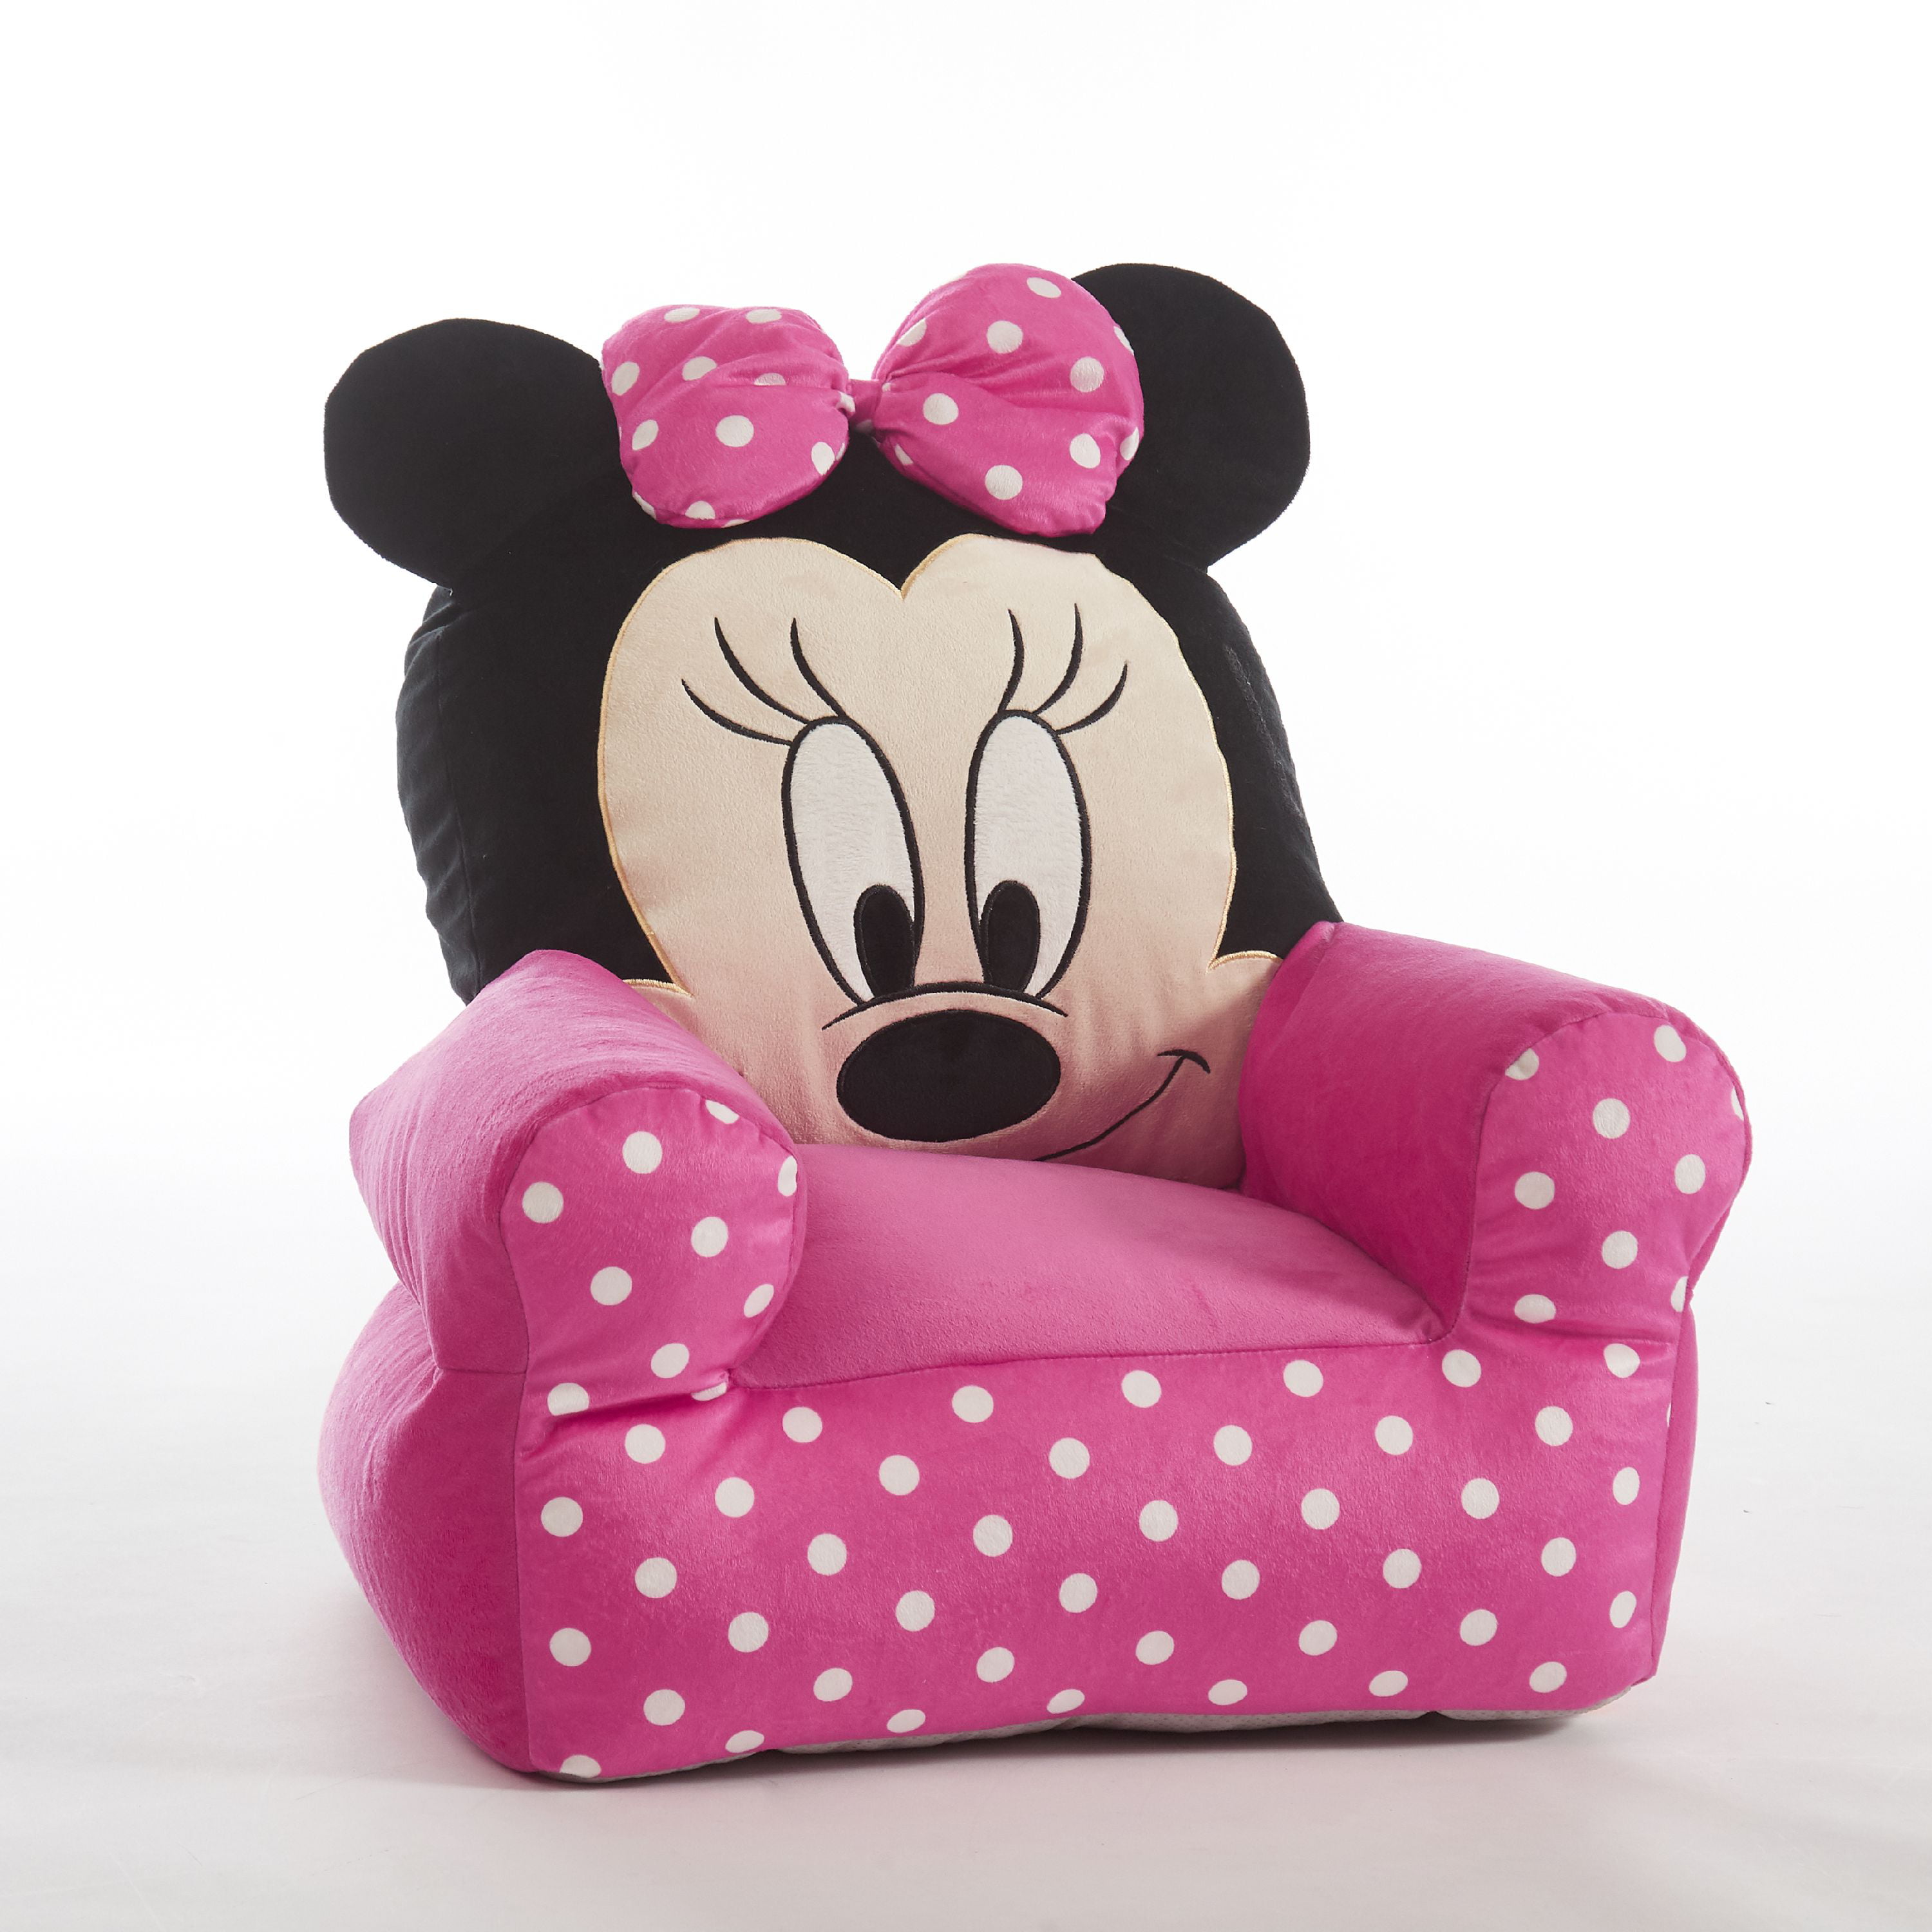 Disney Junior Minnie Mouse Kids Plush Sofa Bean Bag Chair With Sherpa Trimming 